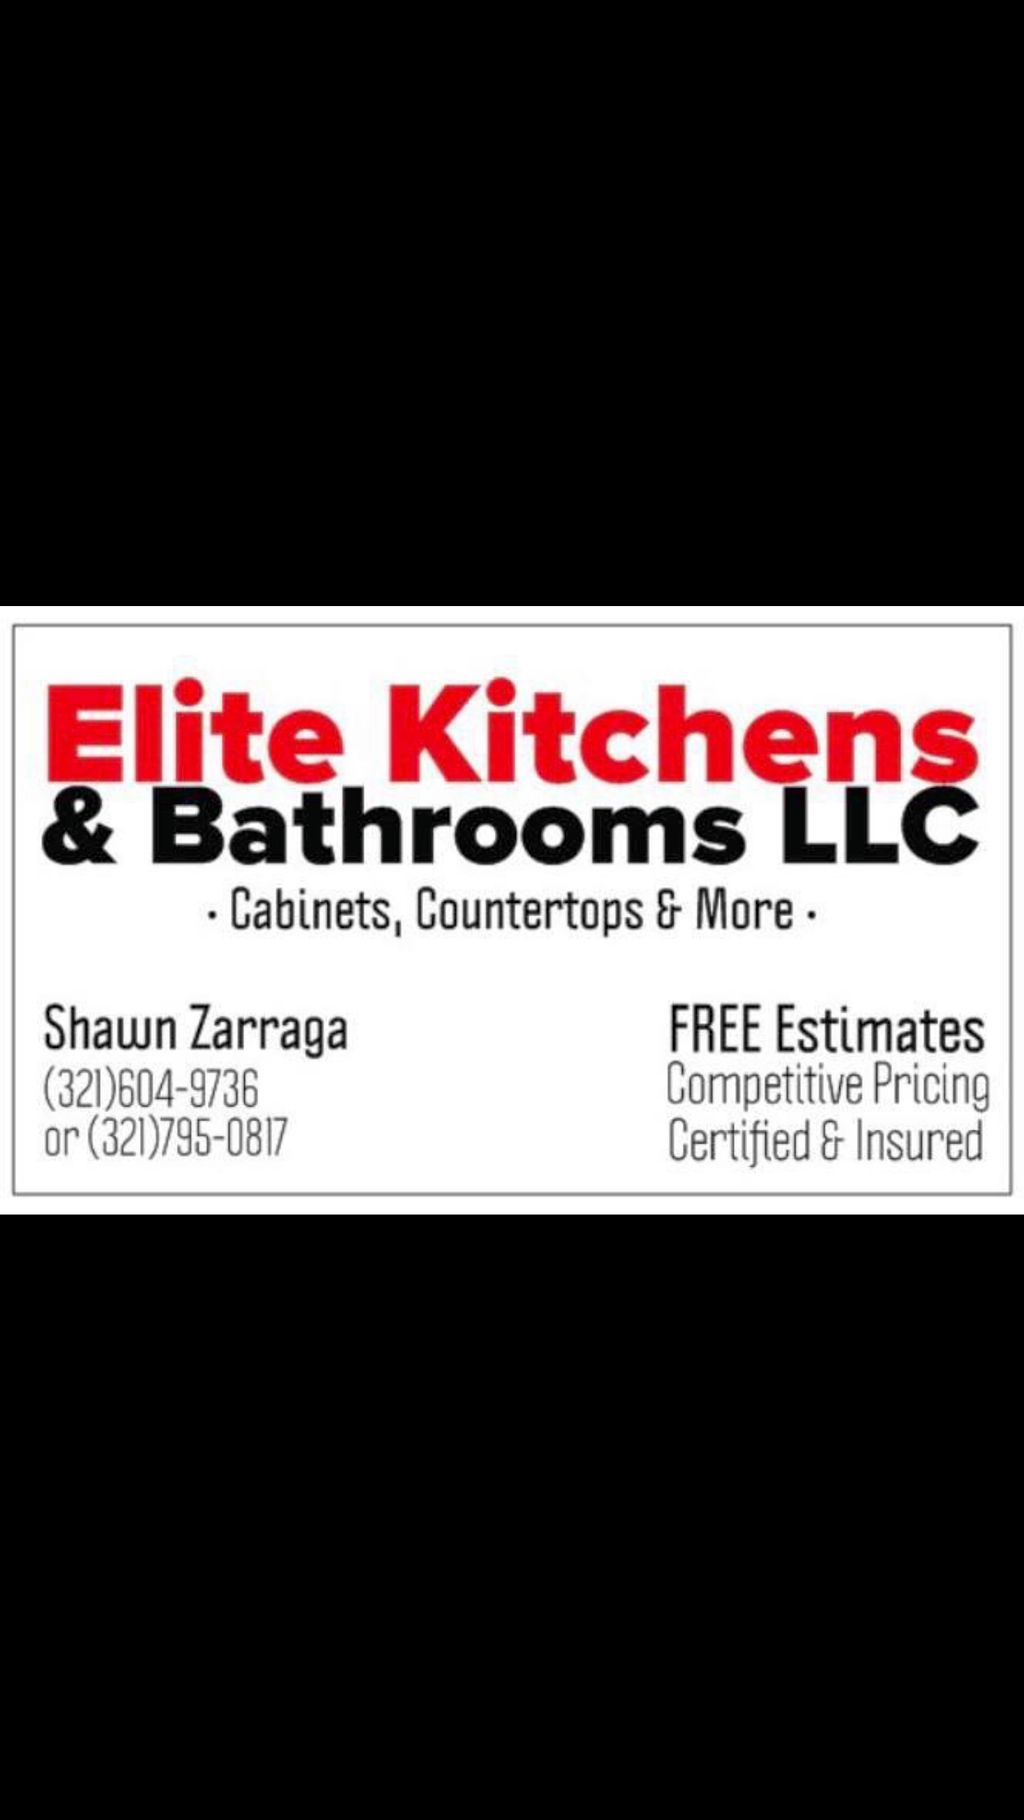 Elite Kitchens and Bathrooms LLC